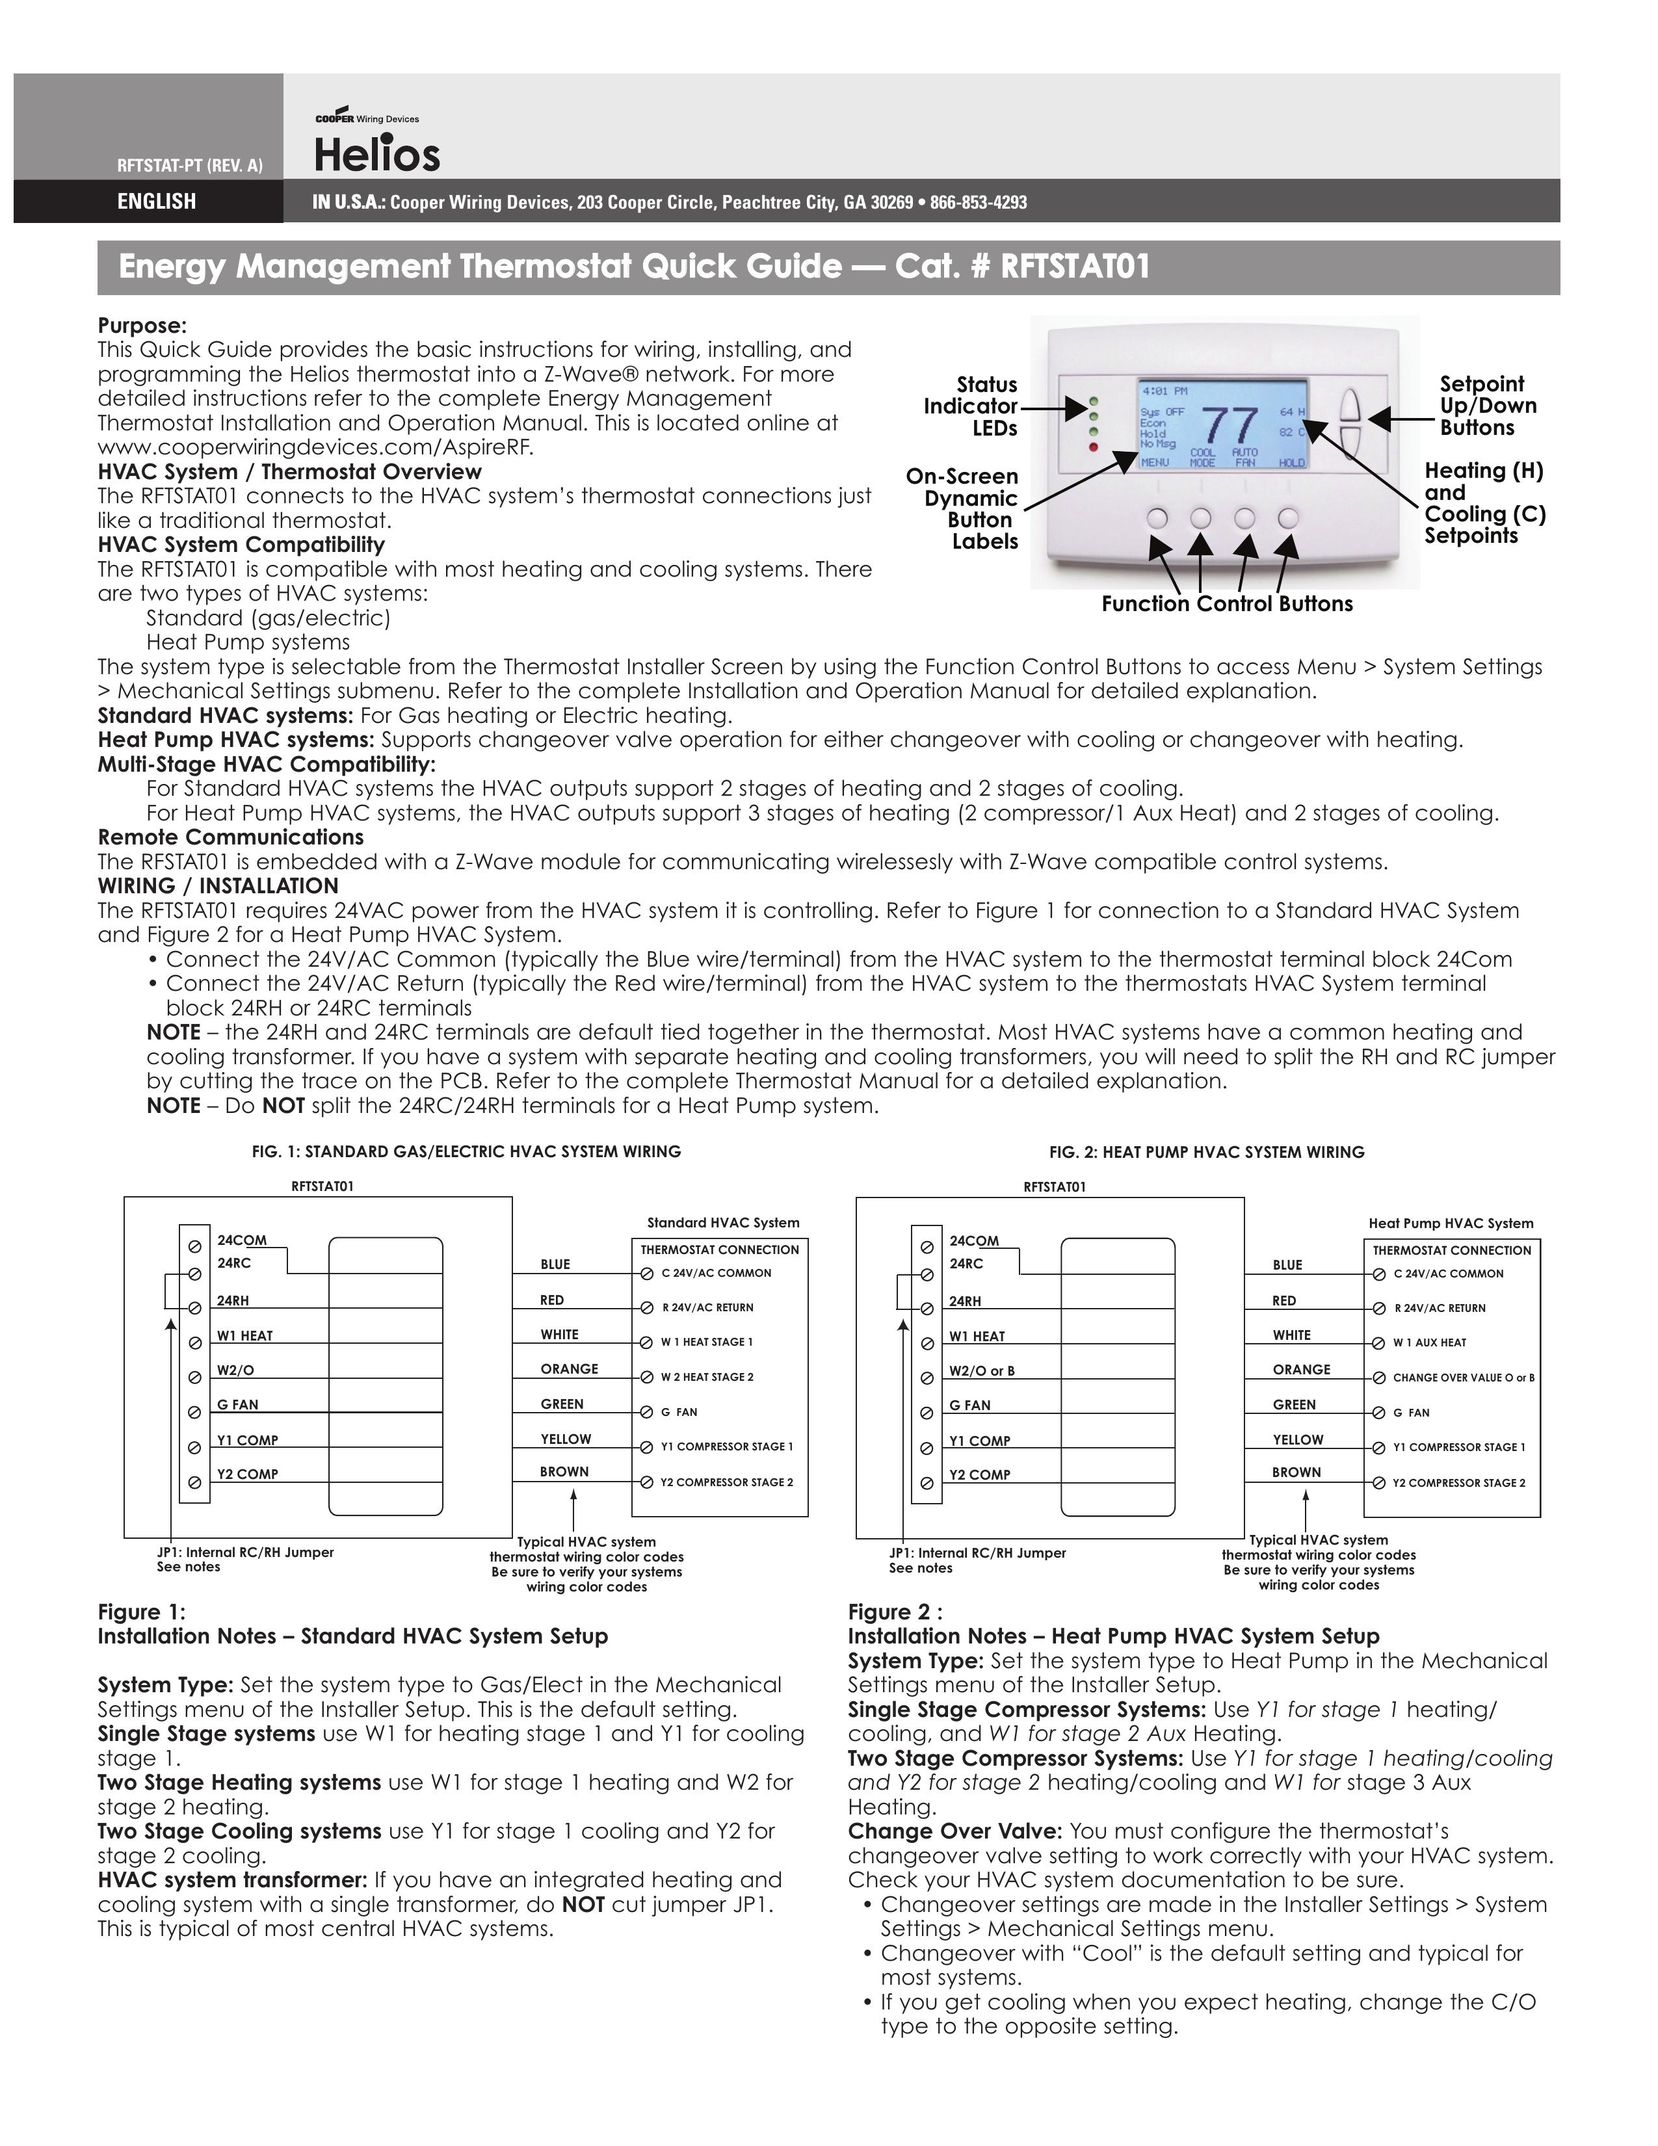 Helio RFTSTAT01 Thermostat User Manual